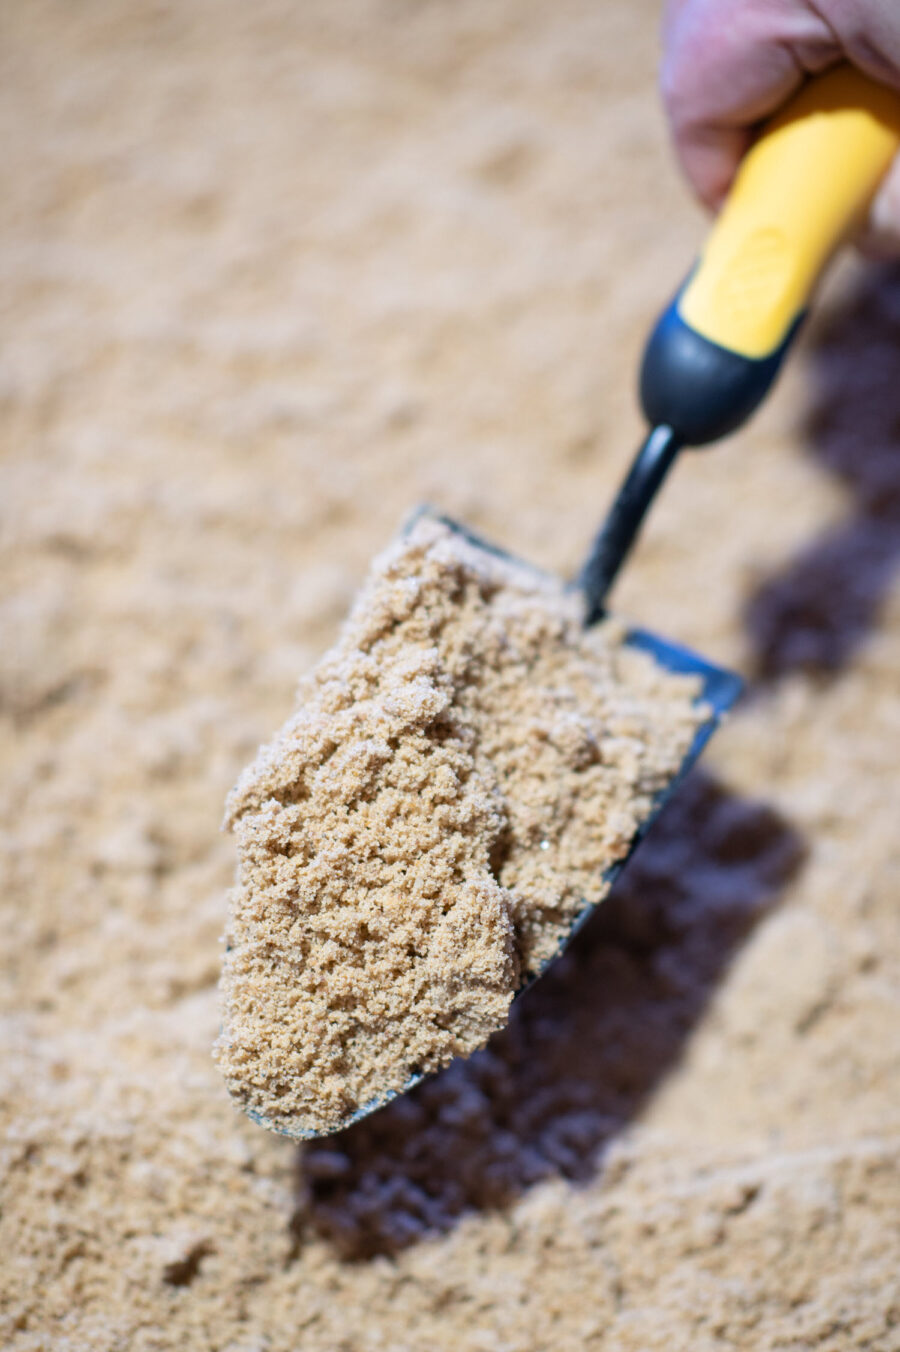 Buttrose Concrete Sand